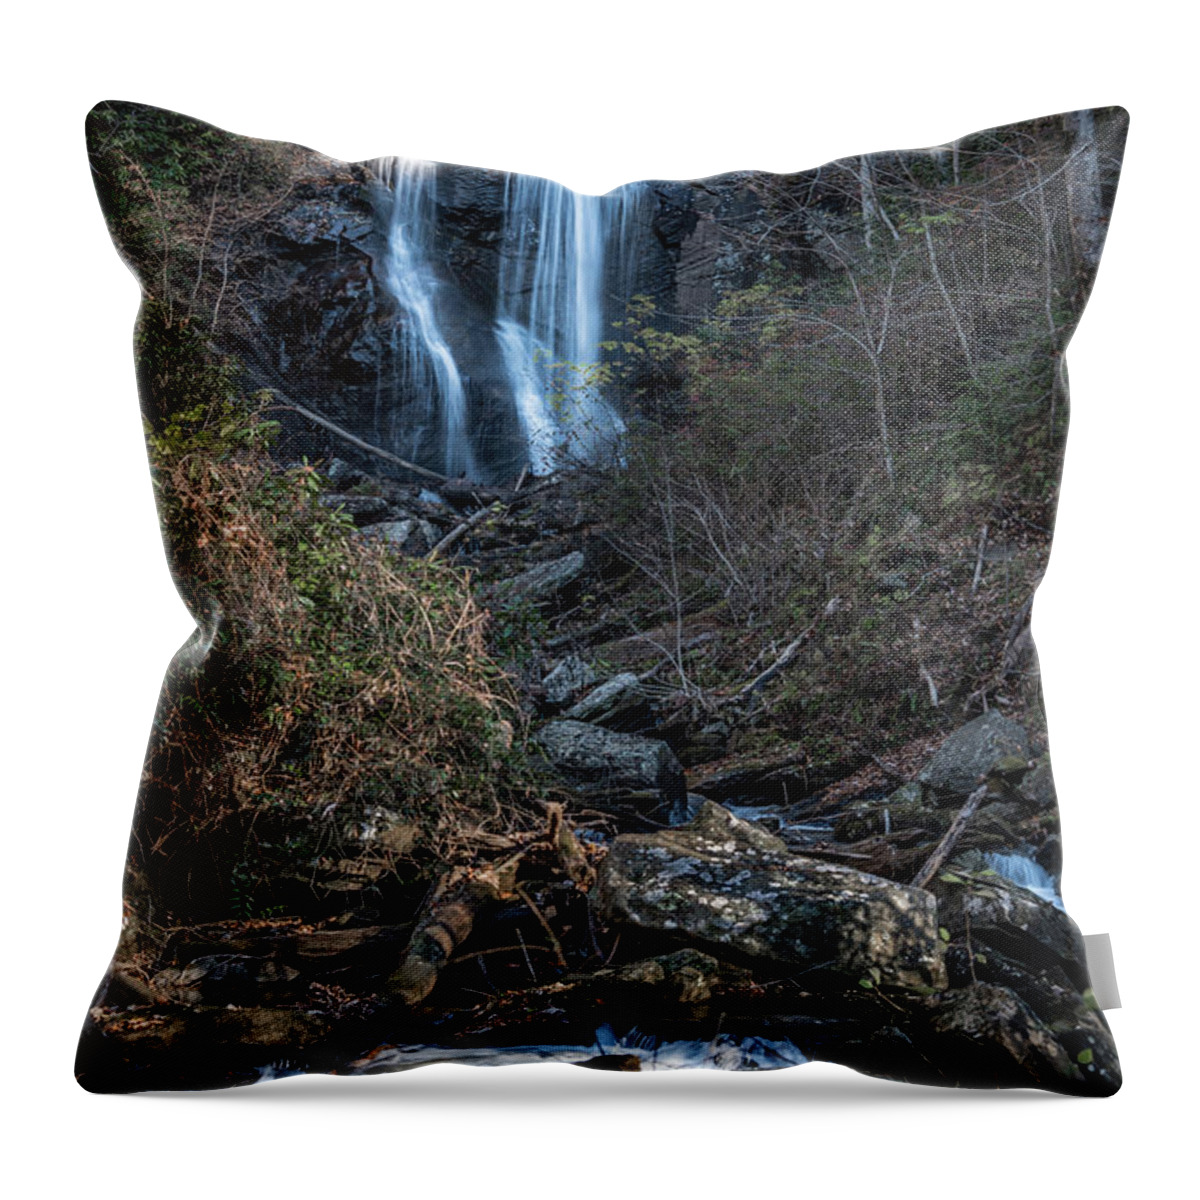 Water Falls Throw Pillow featuring the photograph Anna Ruby Falls by Jaime Mercado